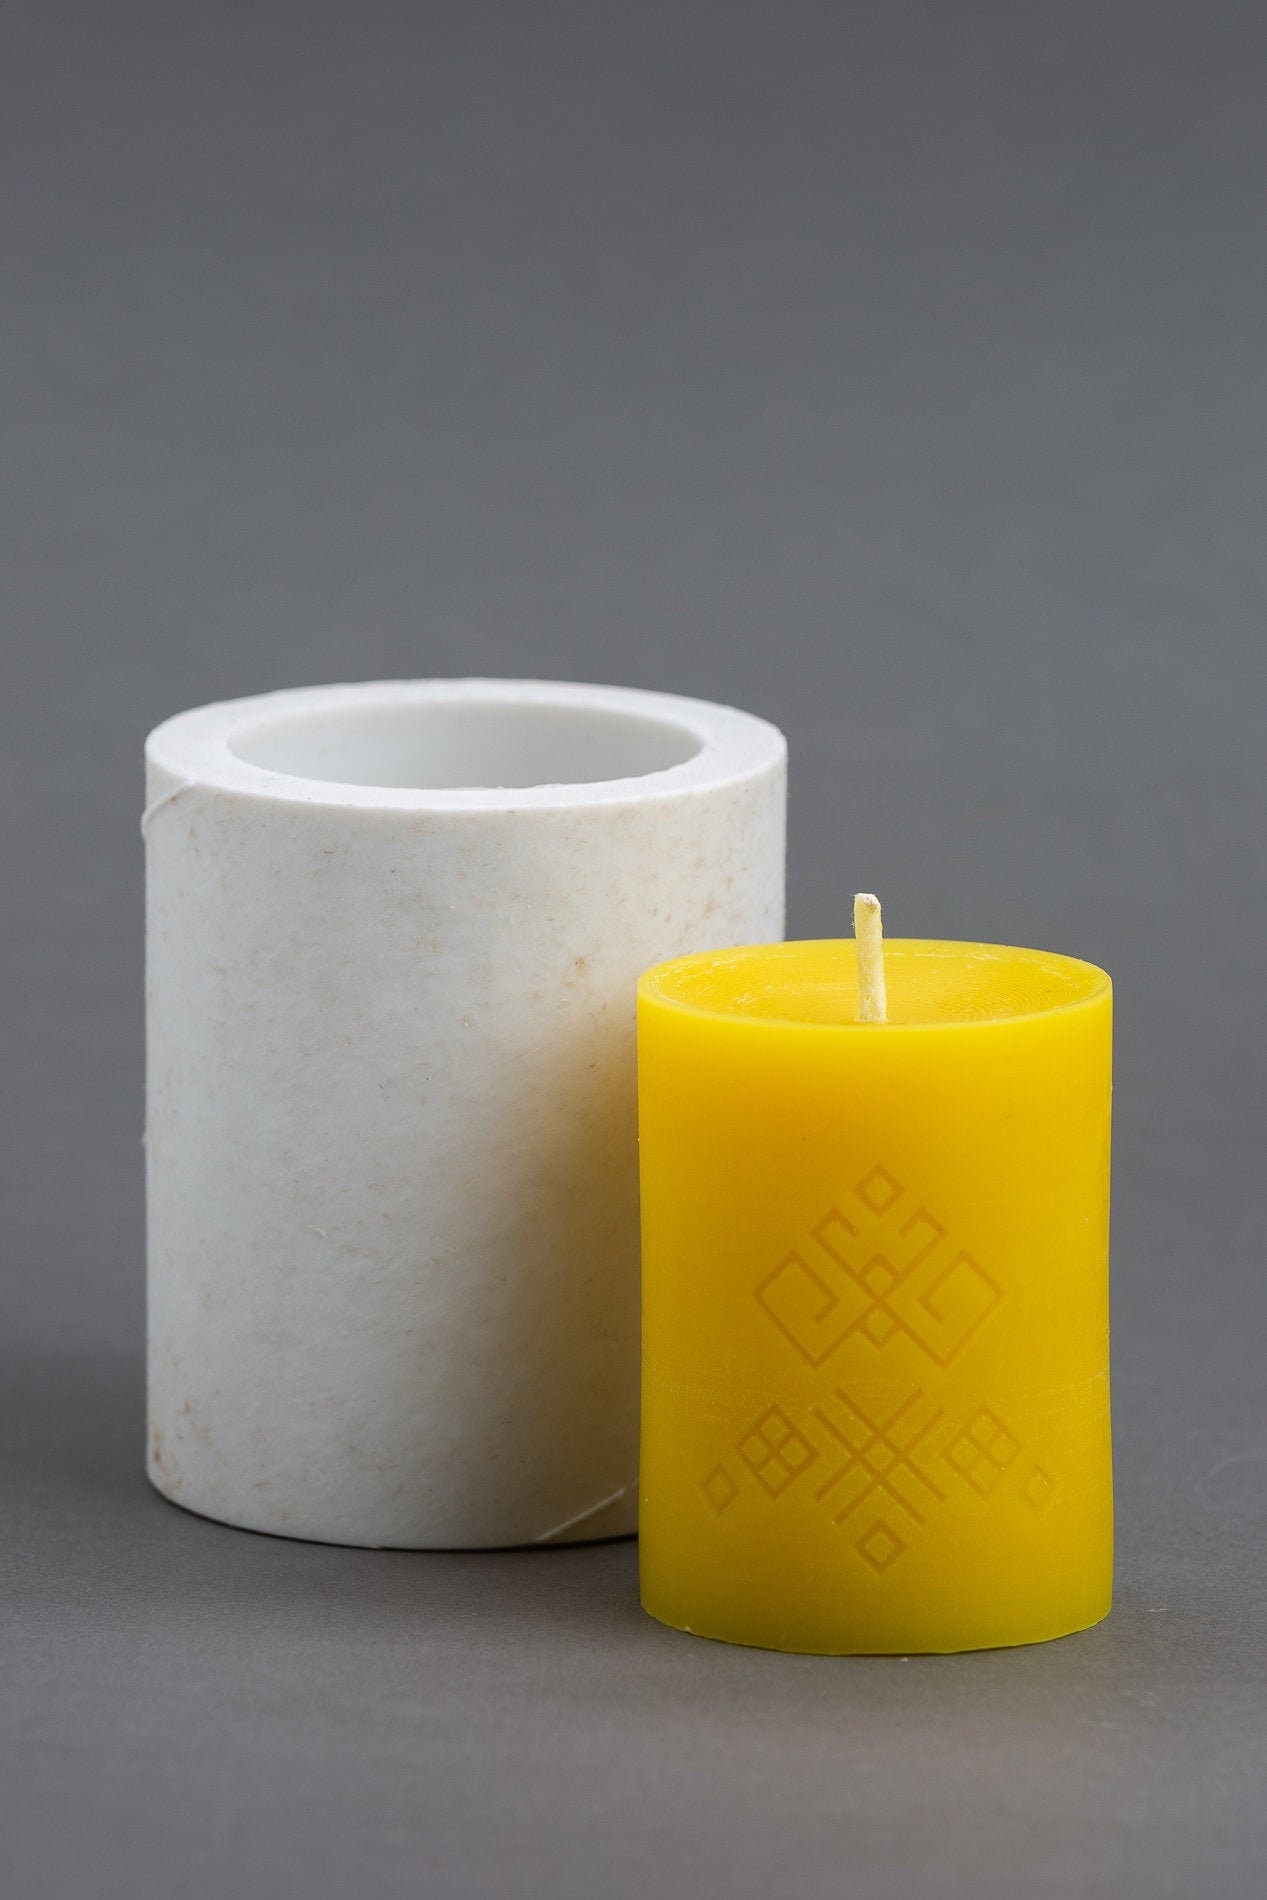 KARELIA MOTIVES Premium High Quality Silicone Candle Molds for